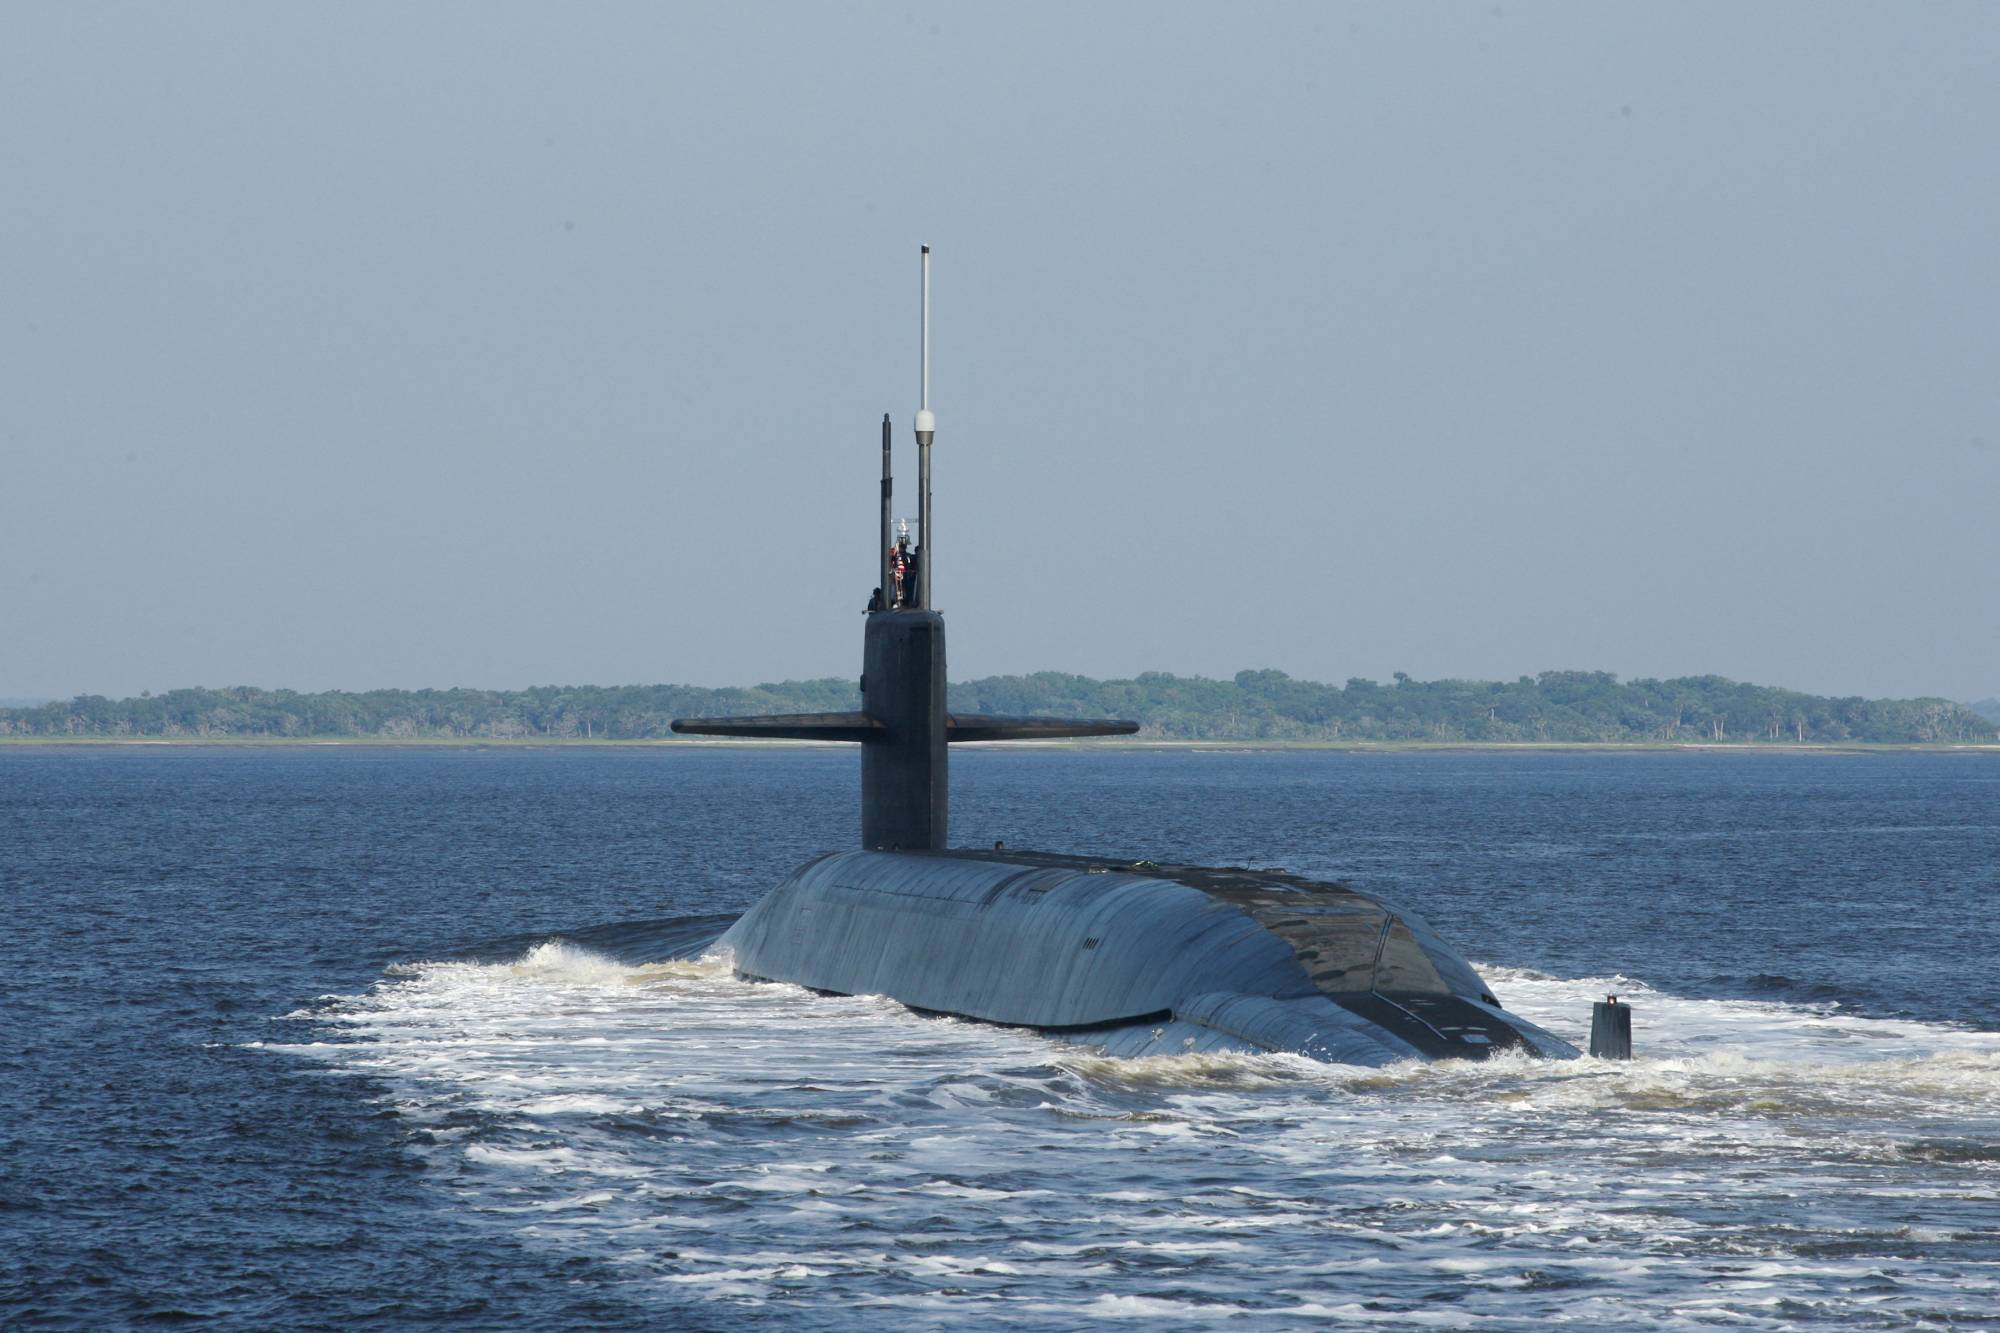 The Ohio-class ballistic-missile submarine USS Alaska returns to Naval Submarine Base Kings Bay following a patrol, in Kings Bay, Georgia, in May 2014. | U.S. NAVY / VIA REUTERS